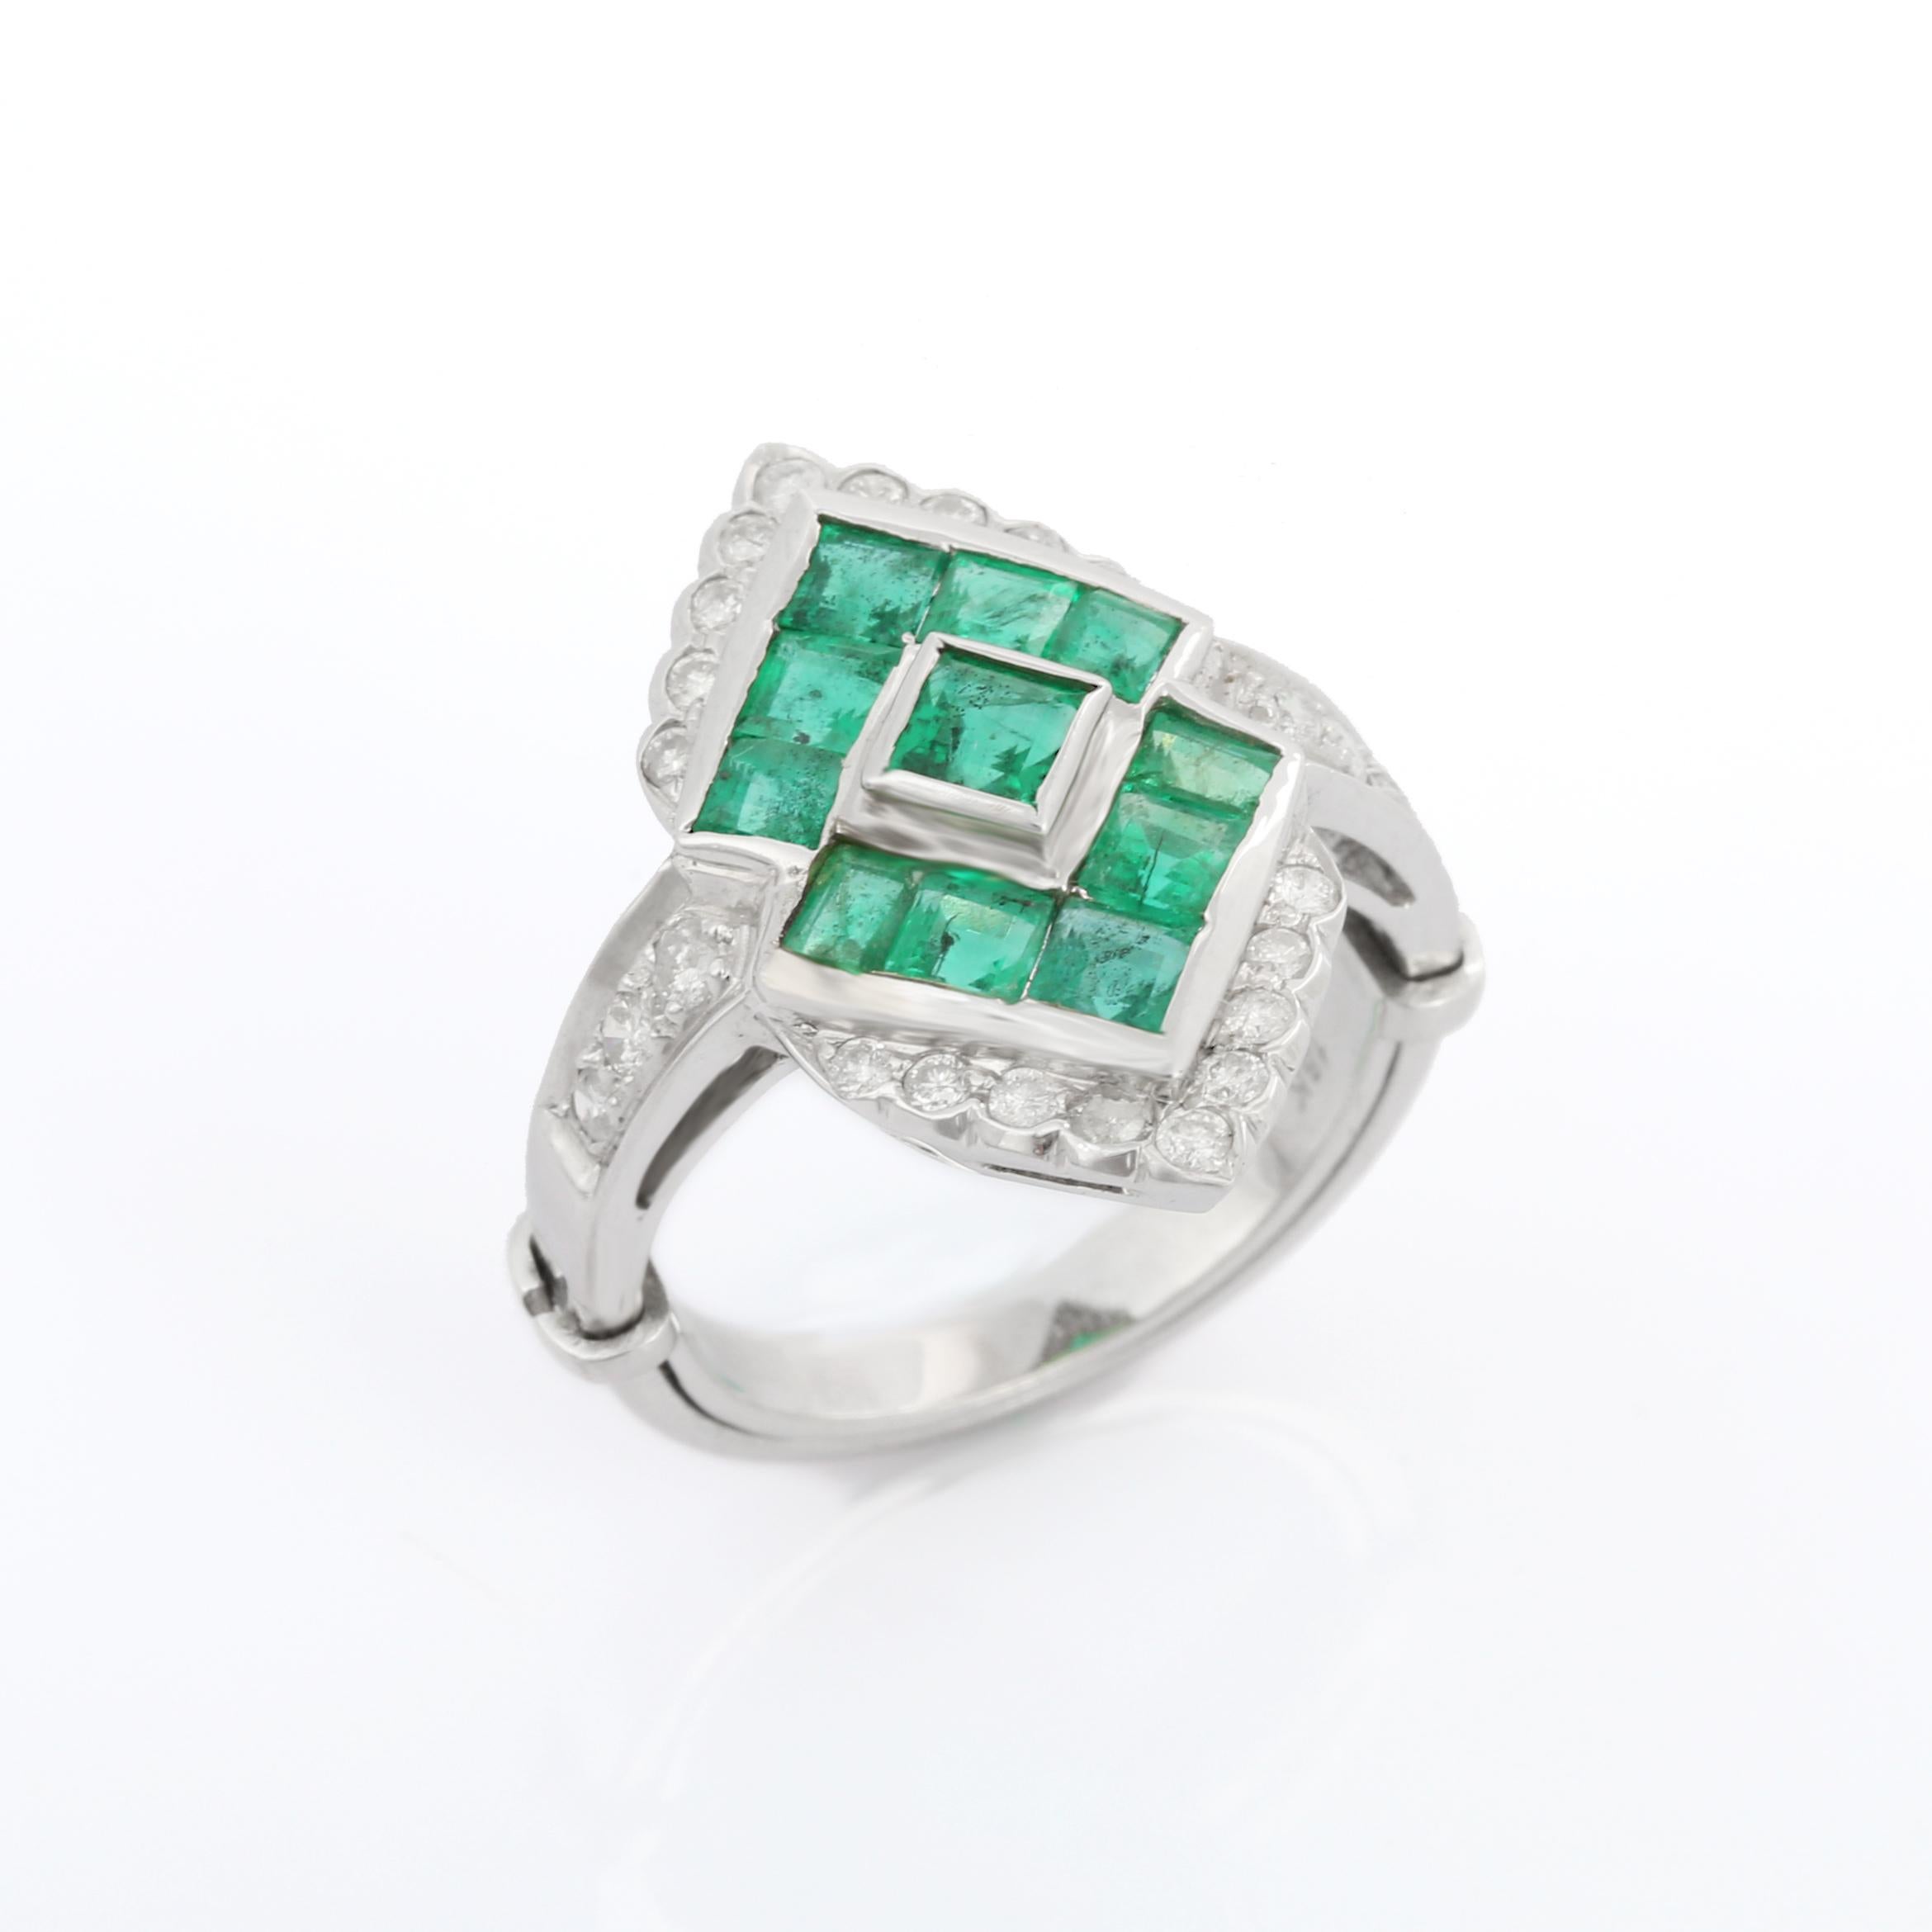 For Sale:  18k Solid White Gold Emerald Diamond Ring, Fine Emerald Ring 6